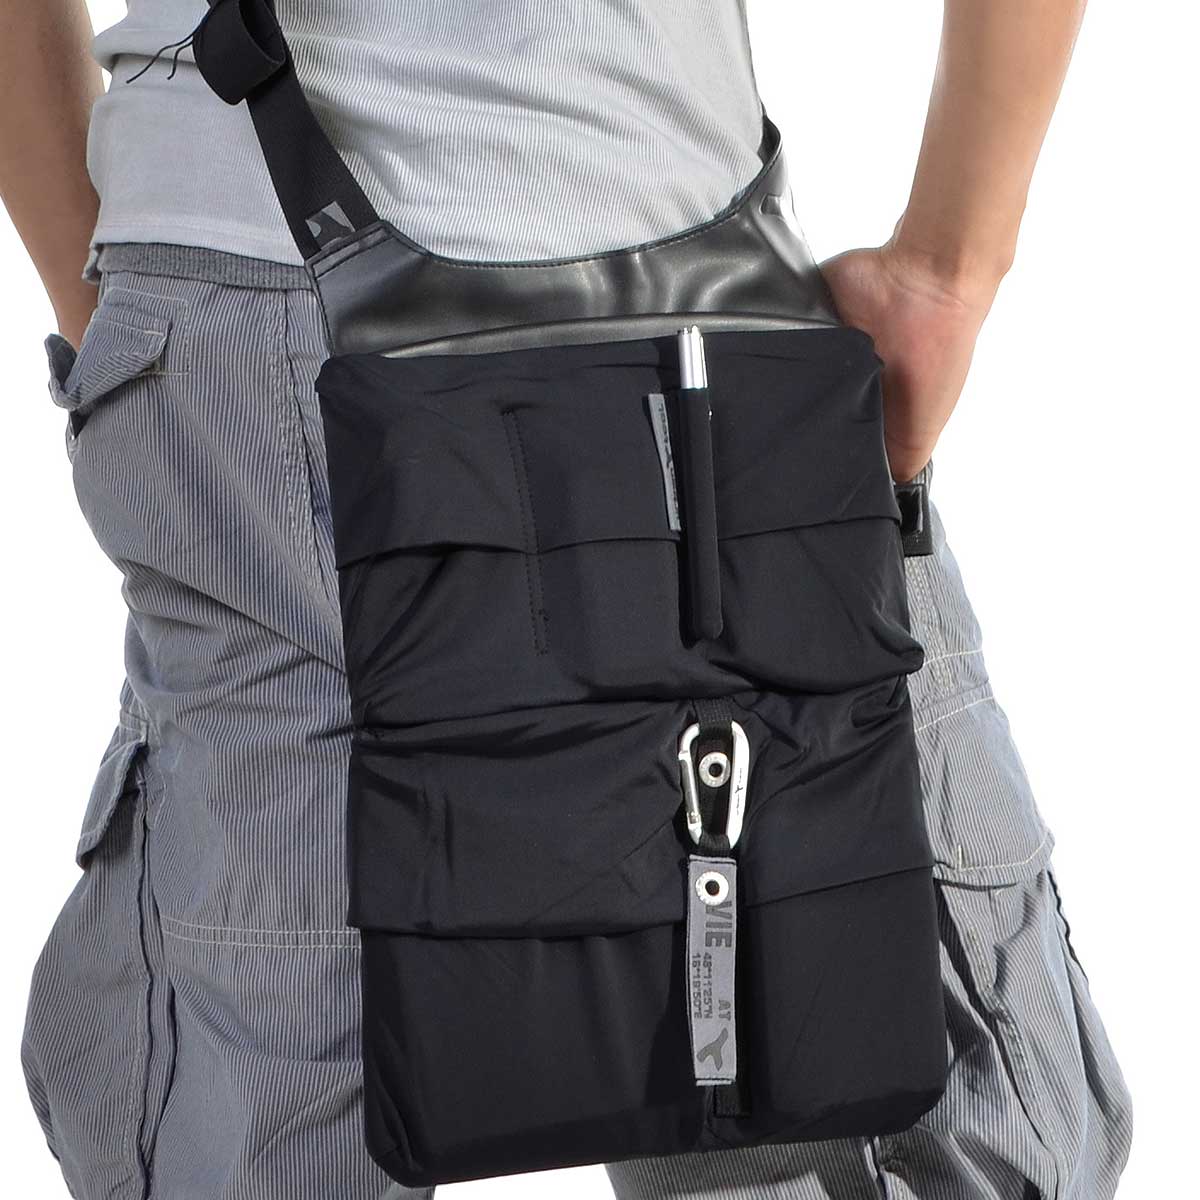 Stylish shoulder tablet and smartphone bag URBAN TOOL ® slotbar